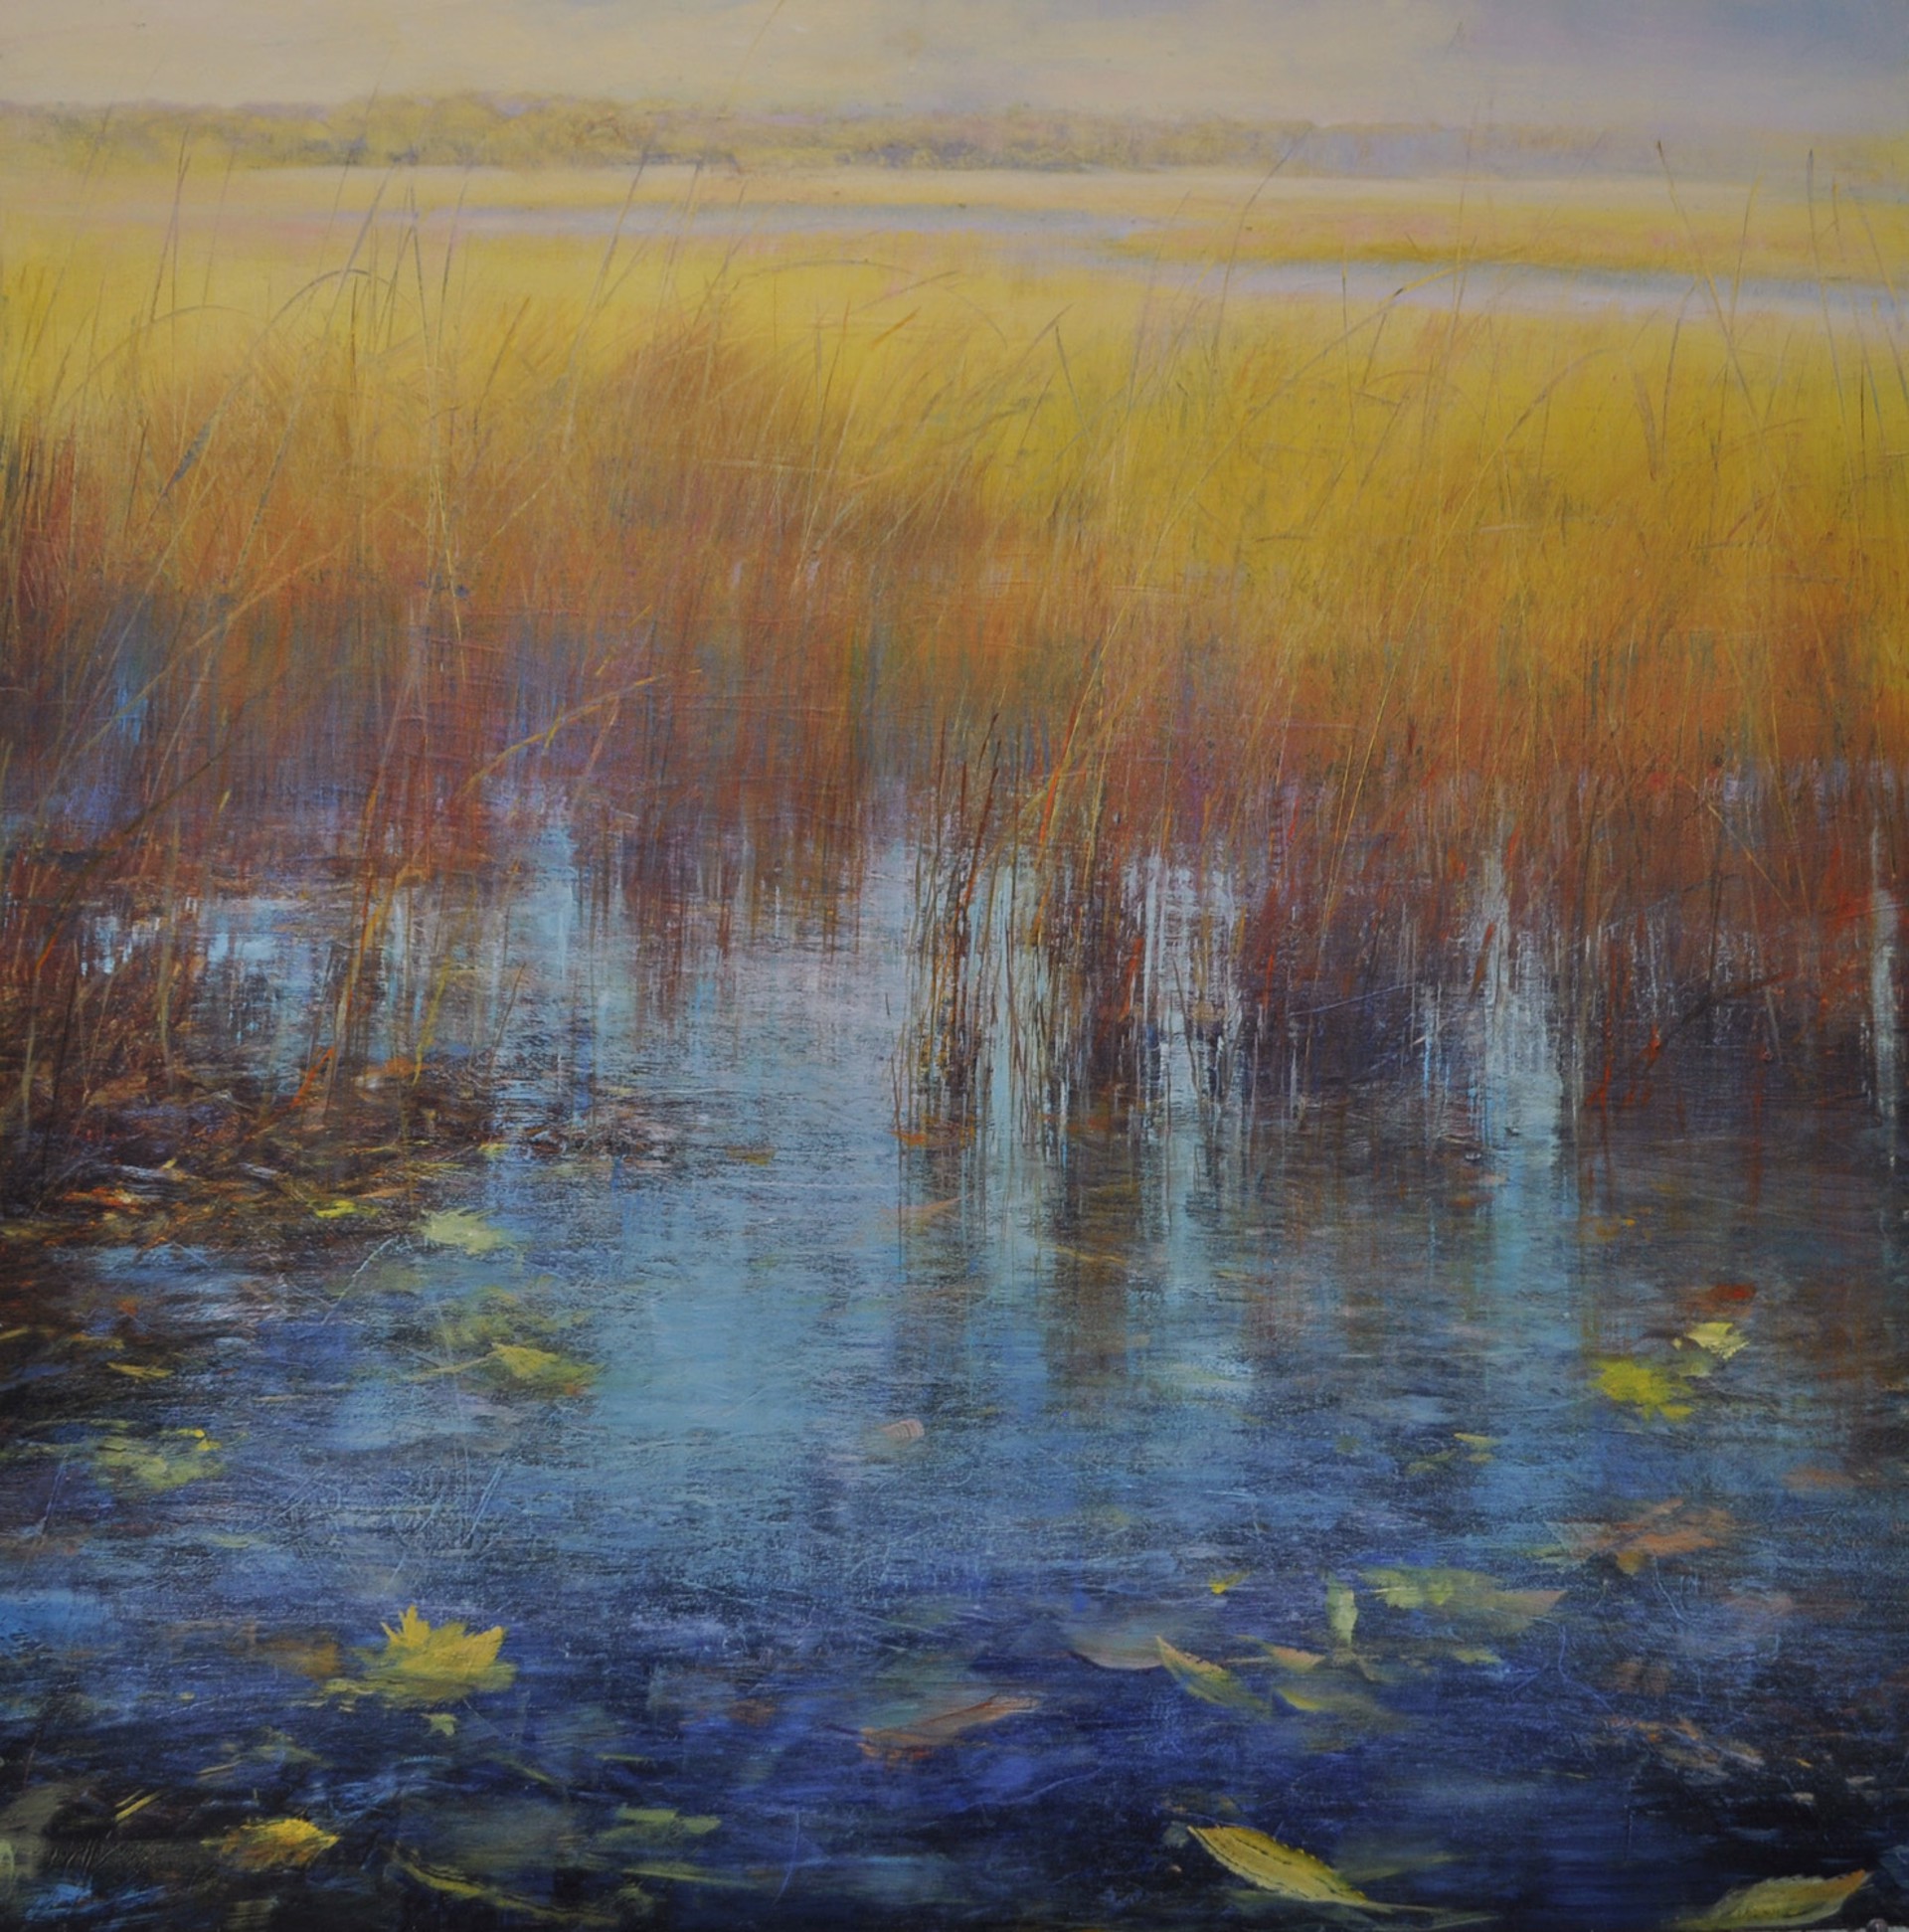 Eden in the Reeds by David Dunlop